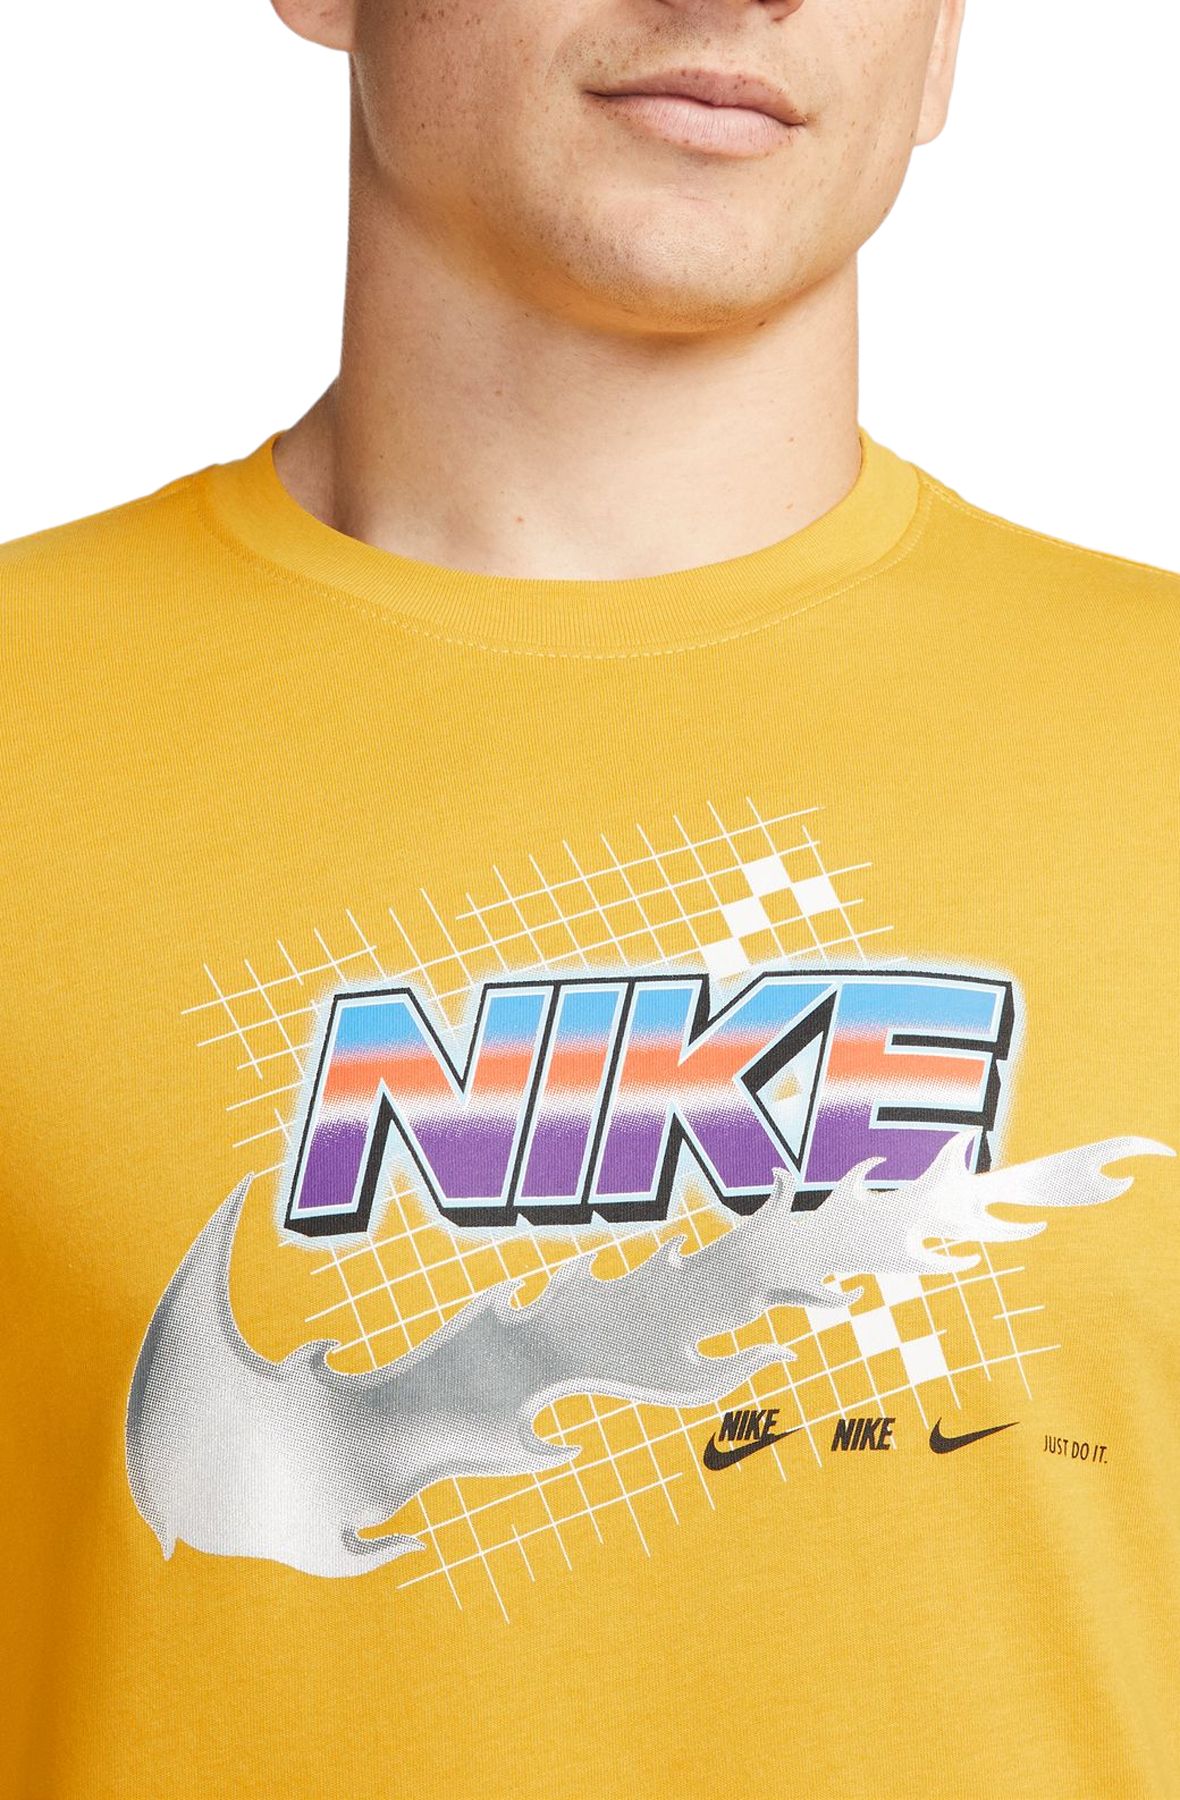 NIKE Sportswear Racing Tee DR7994 752 - Shiekh